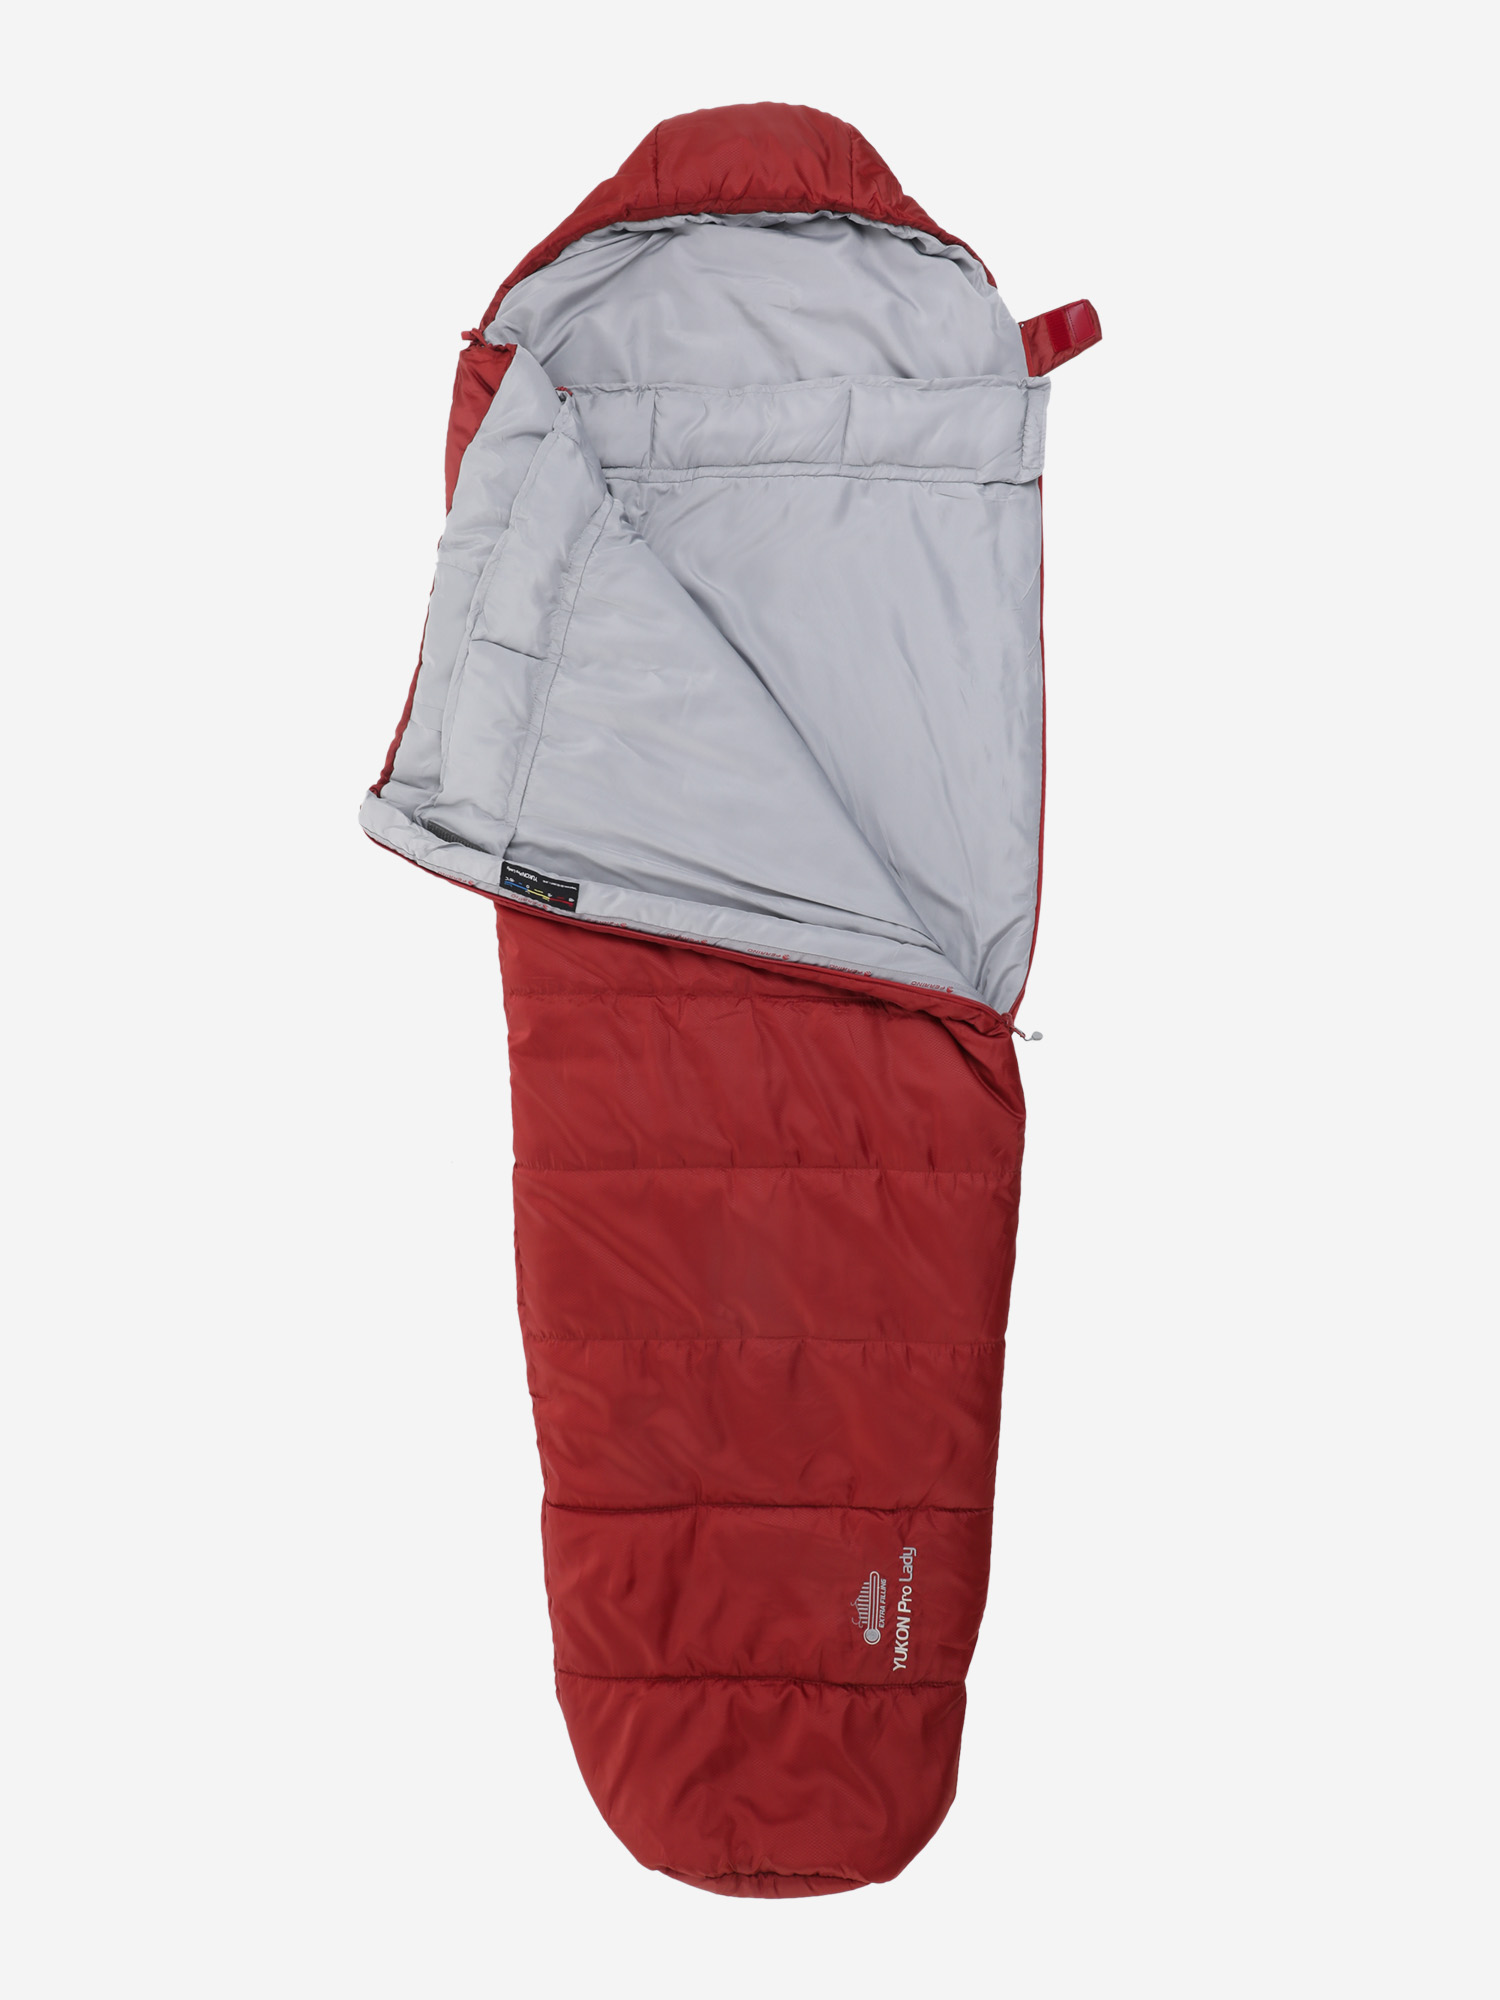 Спальный мешок Ferrino Yulon Lady +5, Красный спальный мешок pinguin mistral lady 175 красный правый p 4159